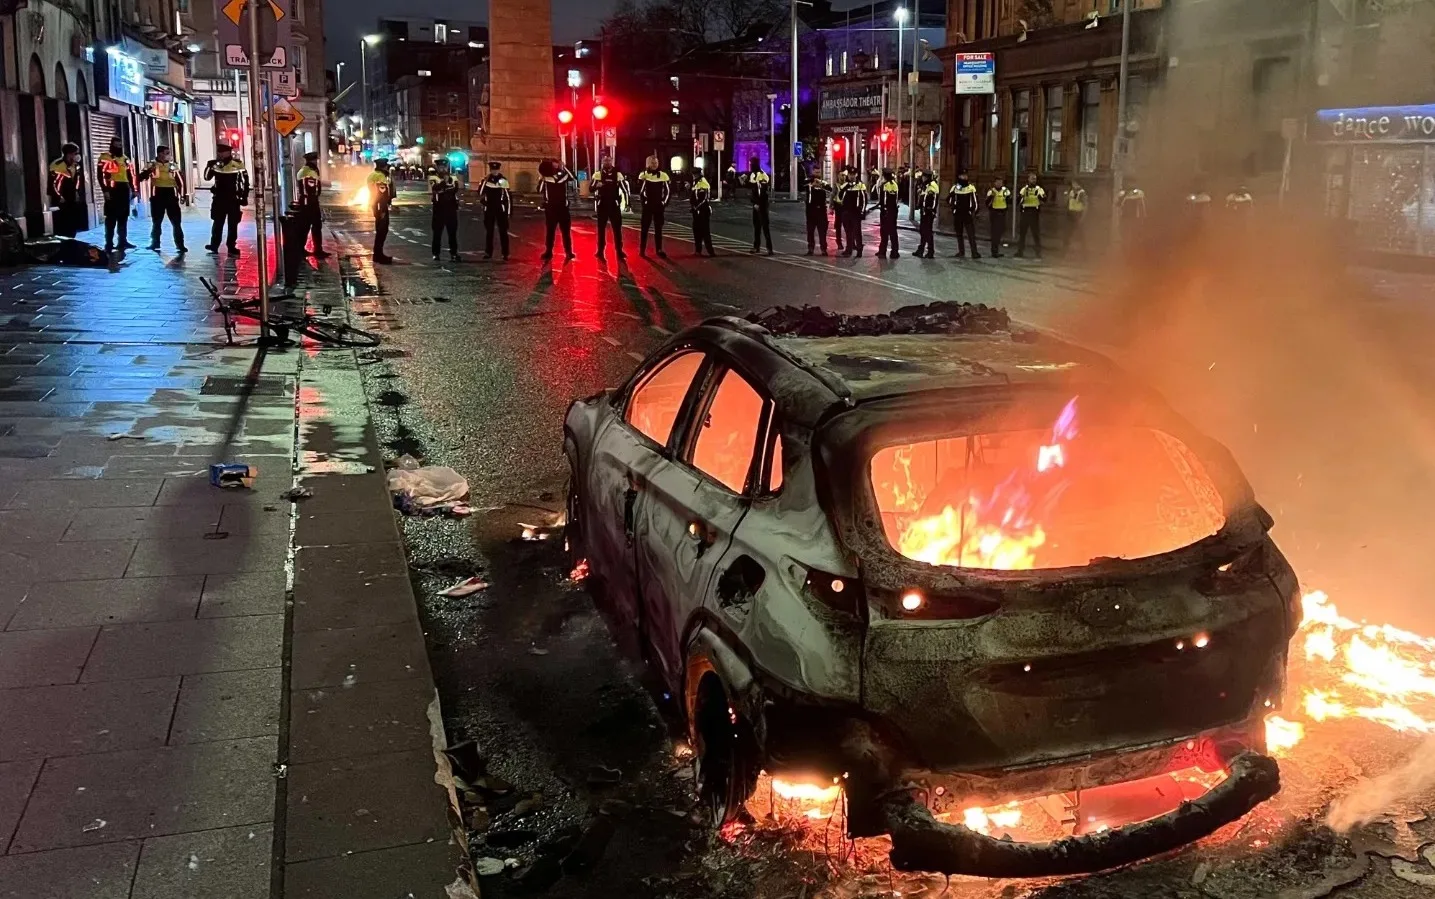 Riot in Dublin